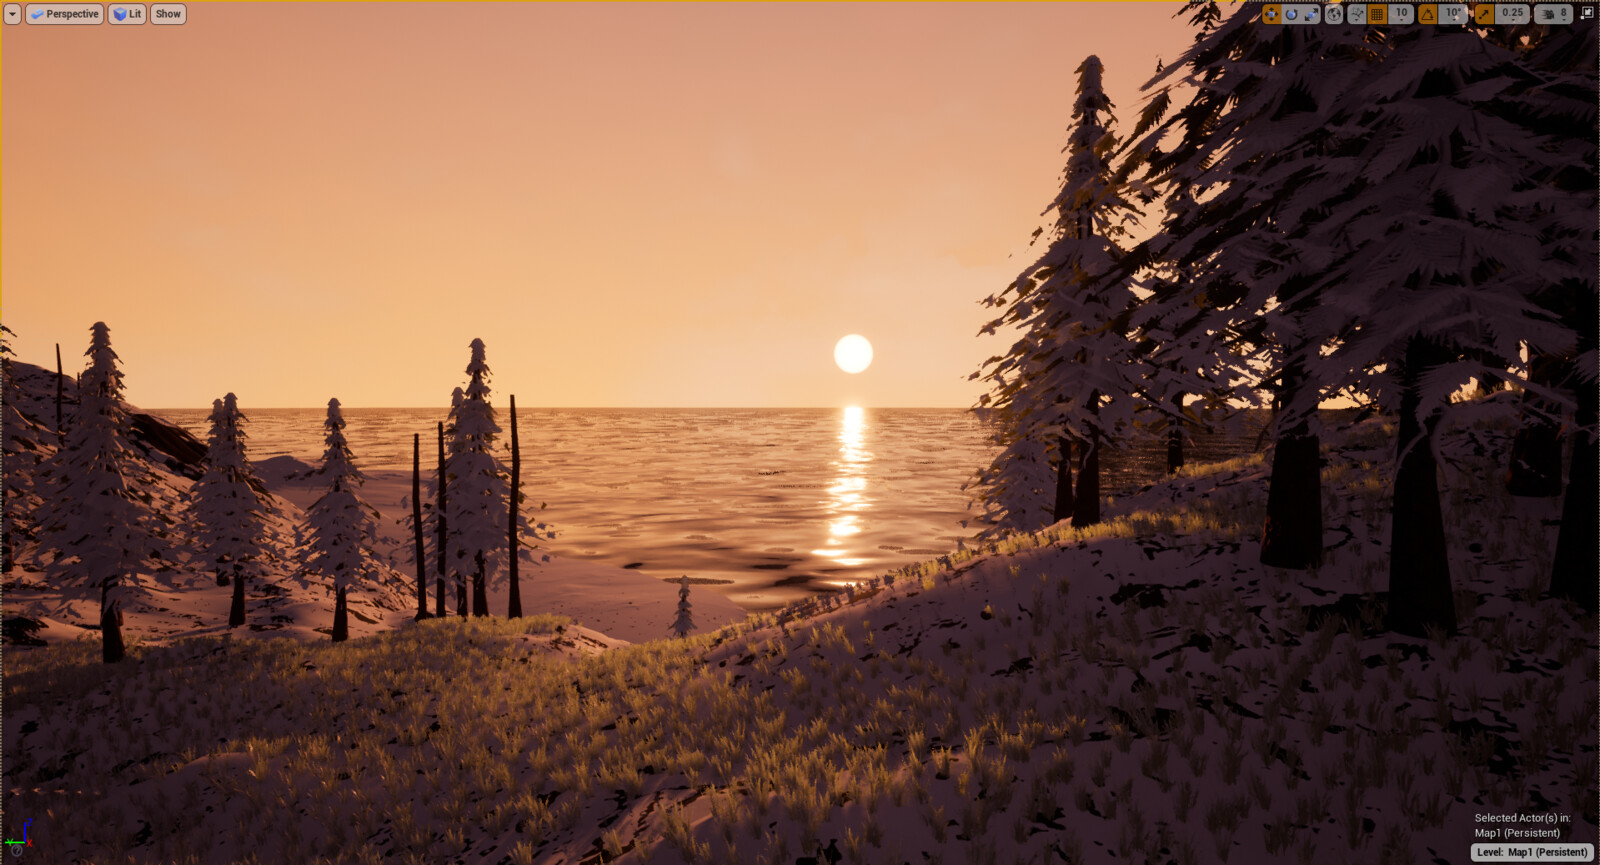 TheLabyrinth Dev - Beautiful Sunset on a snowy beach